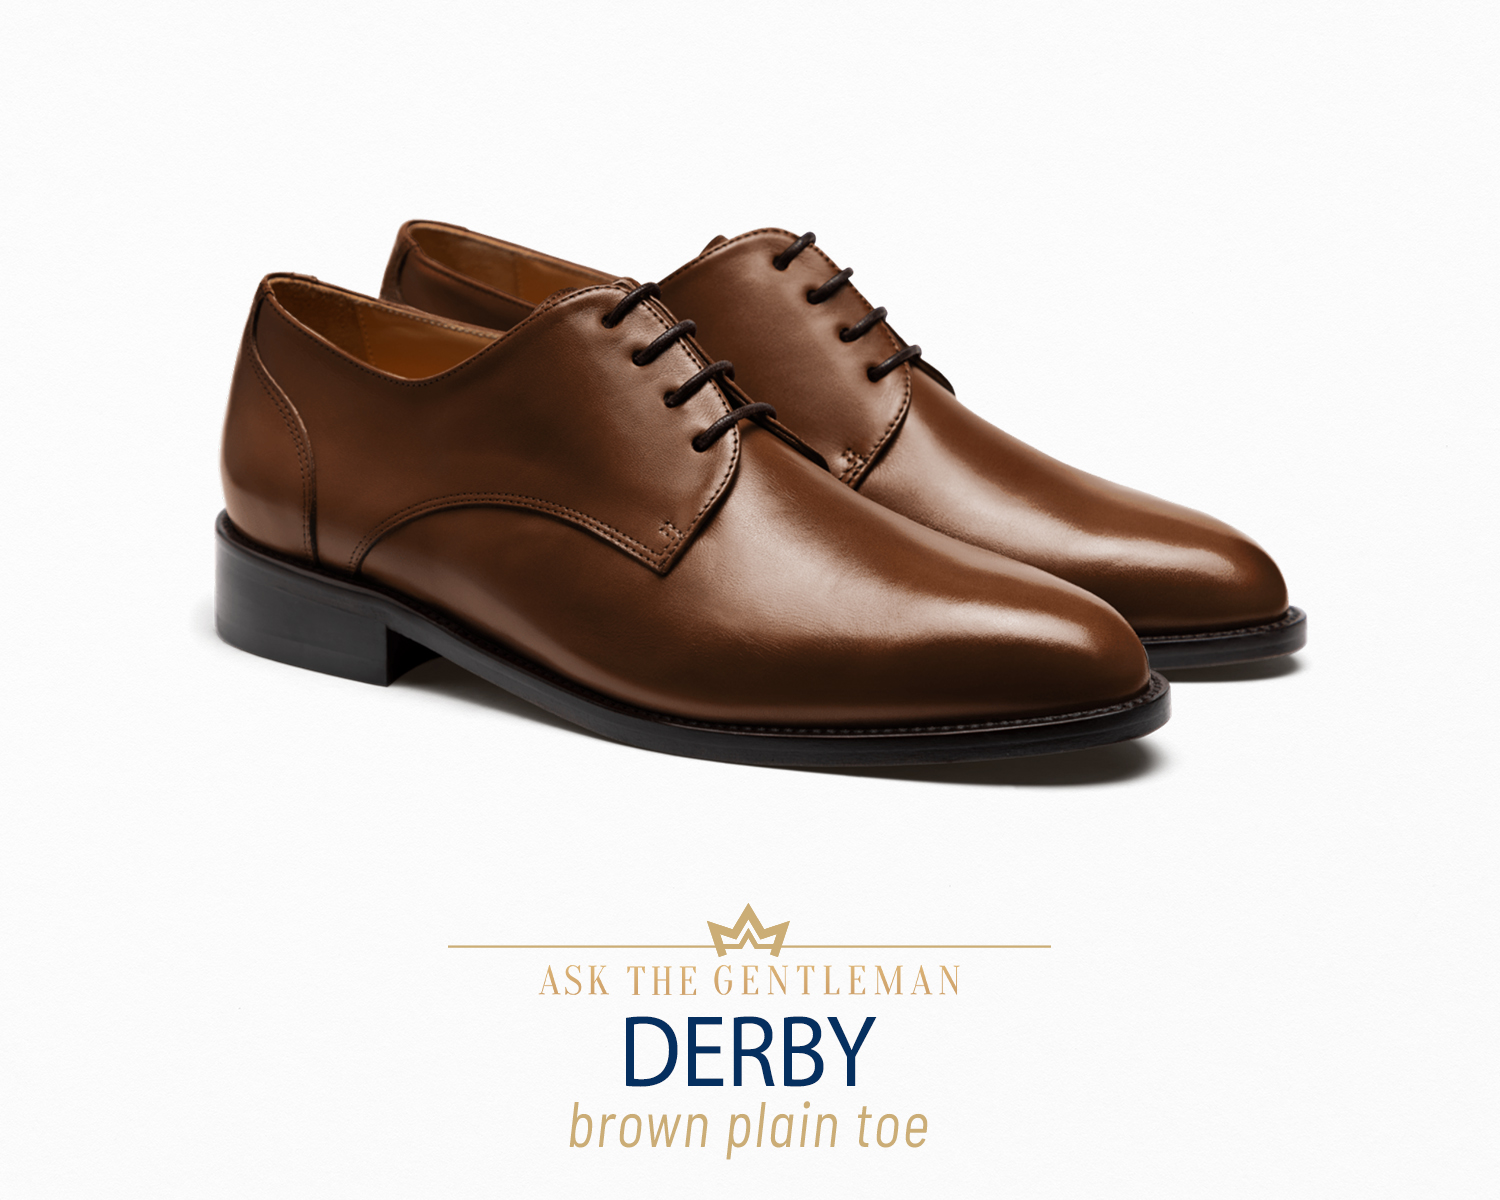 Brown derby dress shoe